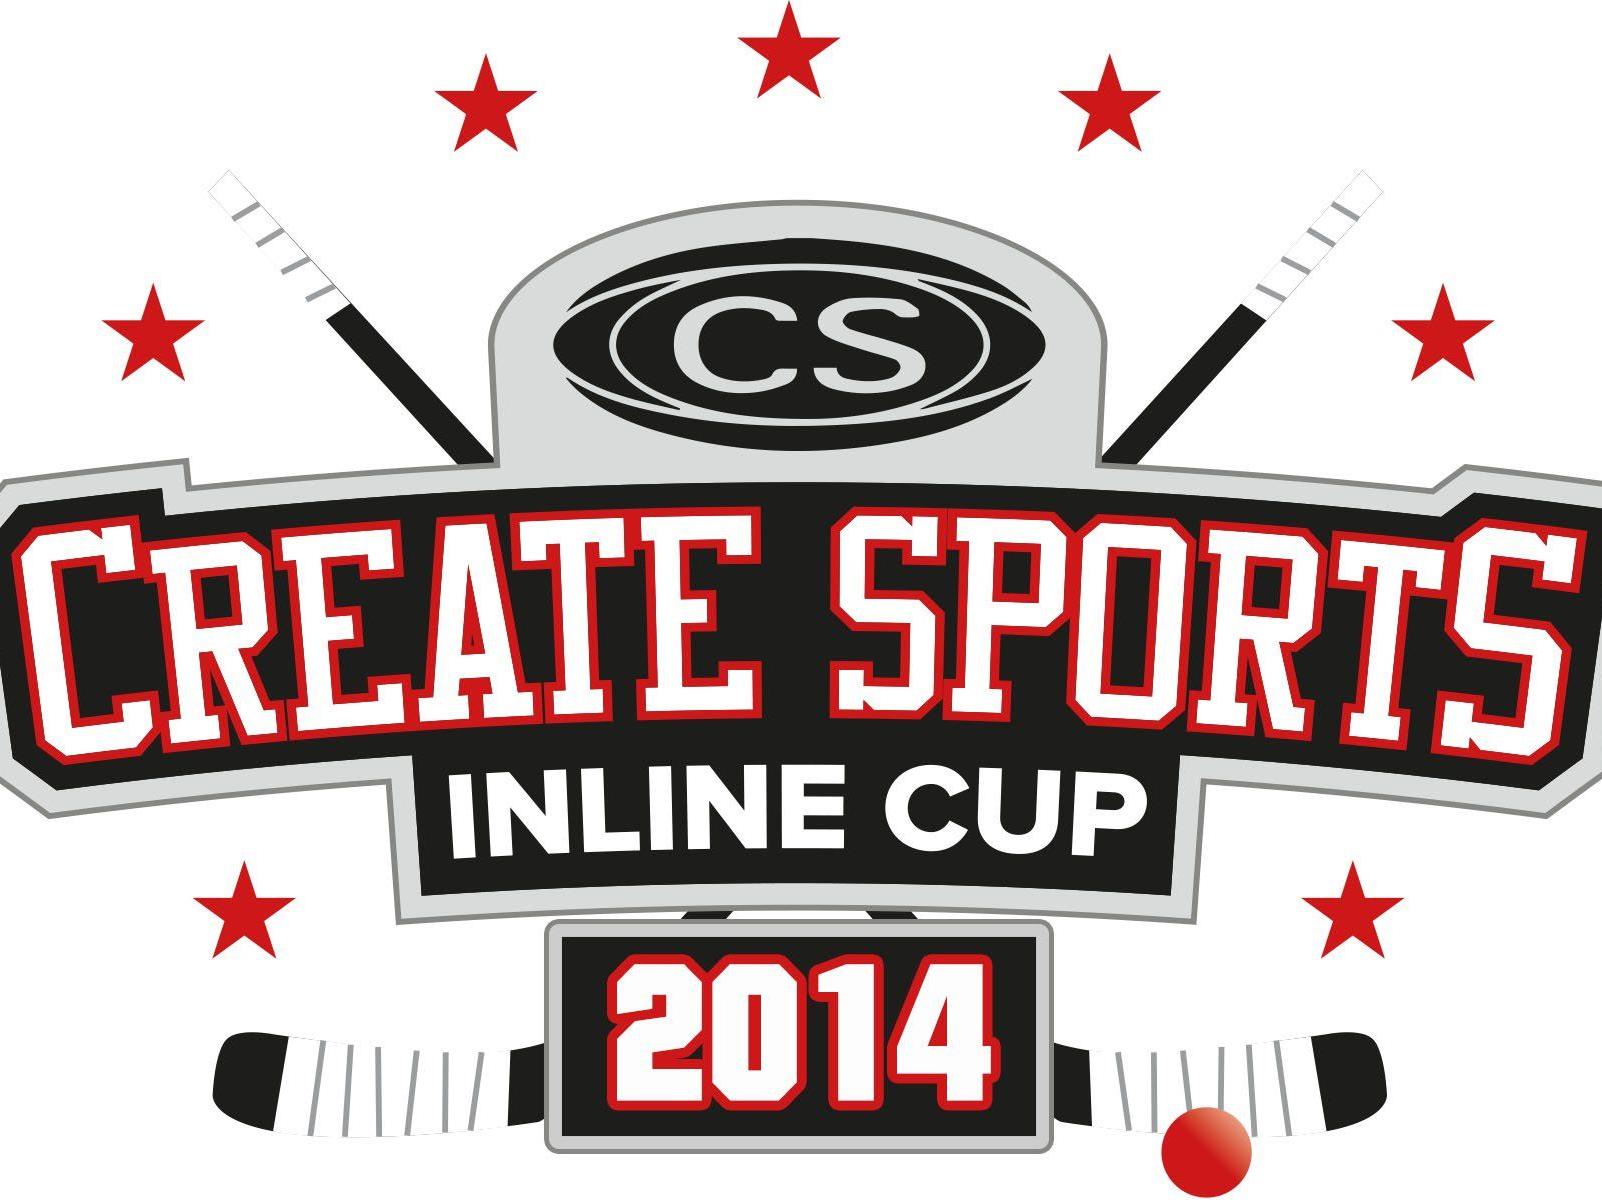 Create-Sports Inline Cup 2014